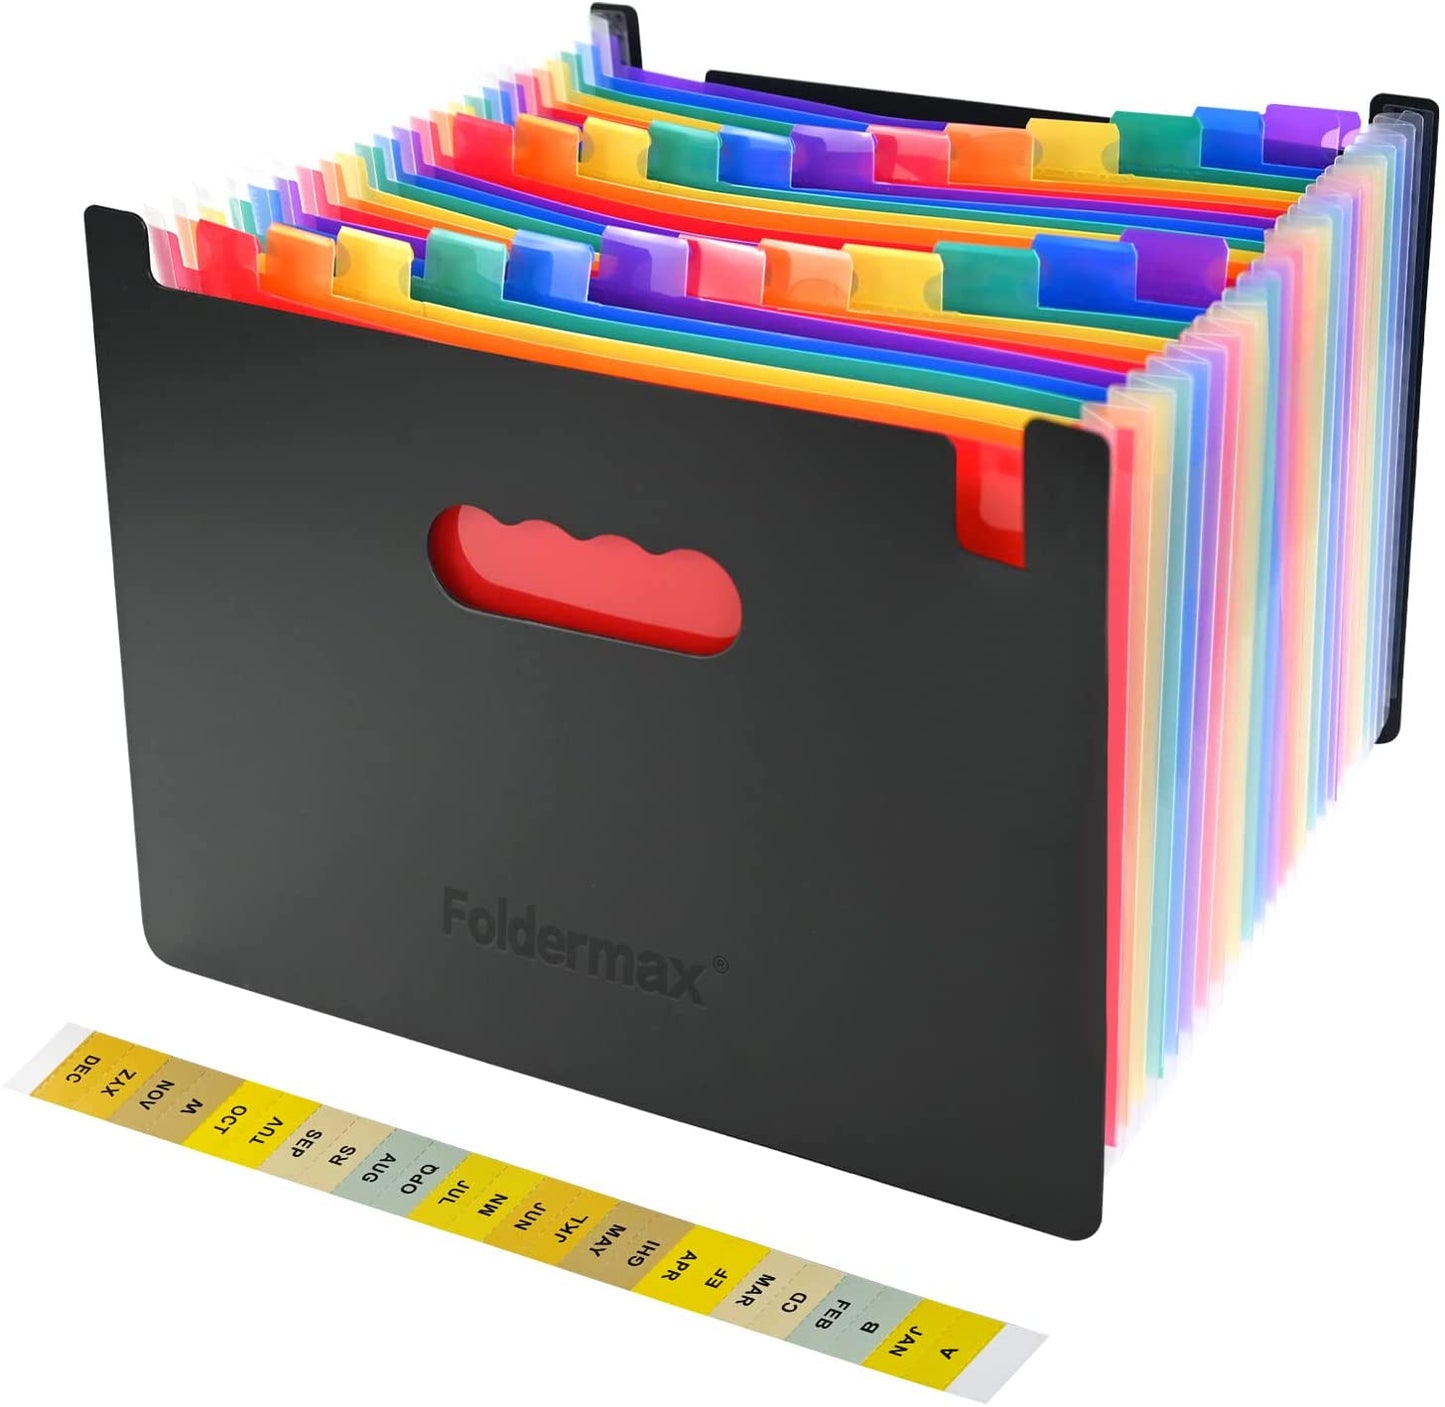 Foldermax 24 Pockets Expanding File Folder,Accordian File Organizer with Expandable Cover,Portable A4 Letter Size File Organizer,Desktop Accordion Folders,High Capacity Plastic Filing Folder Organizer